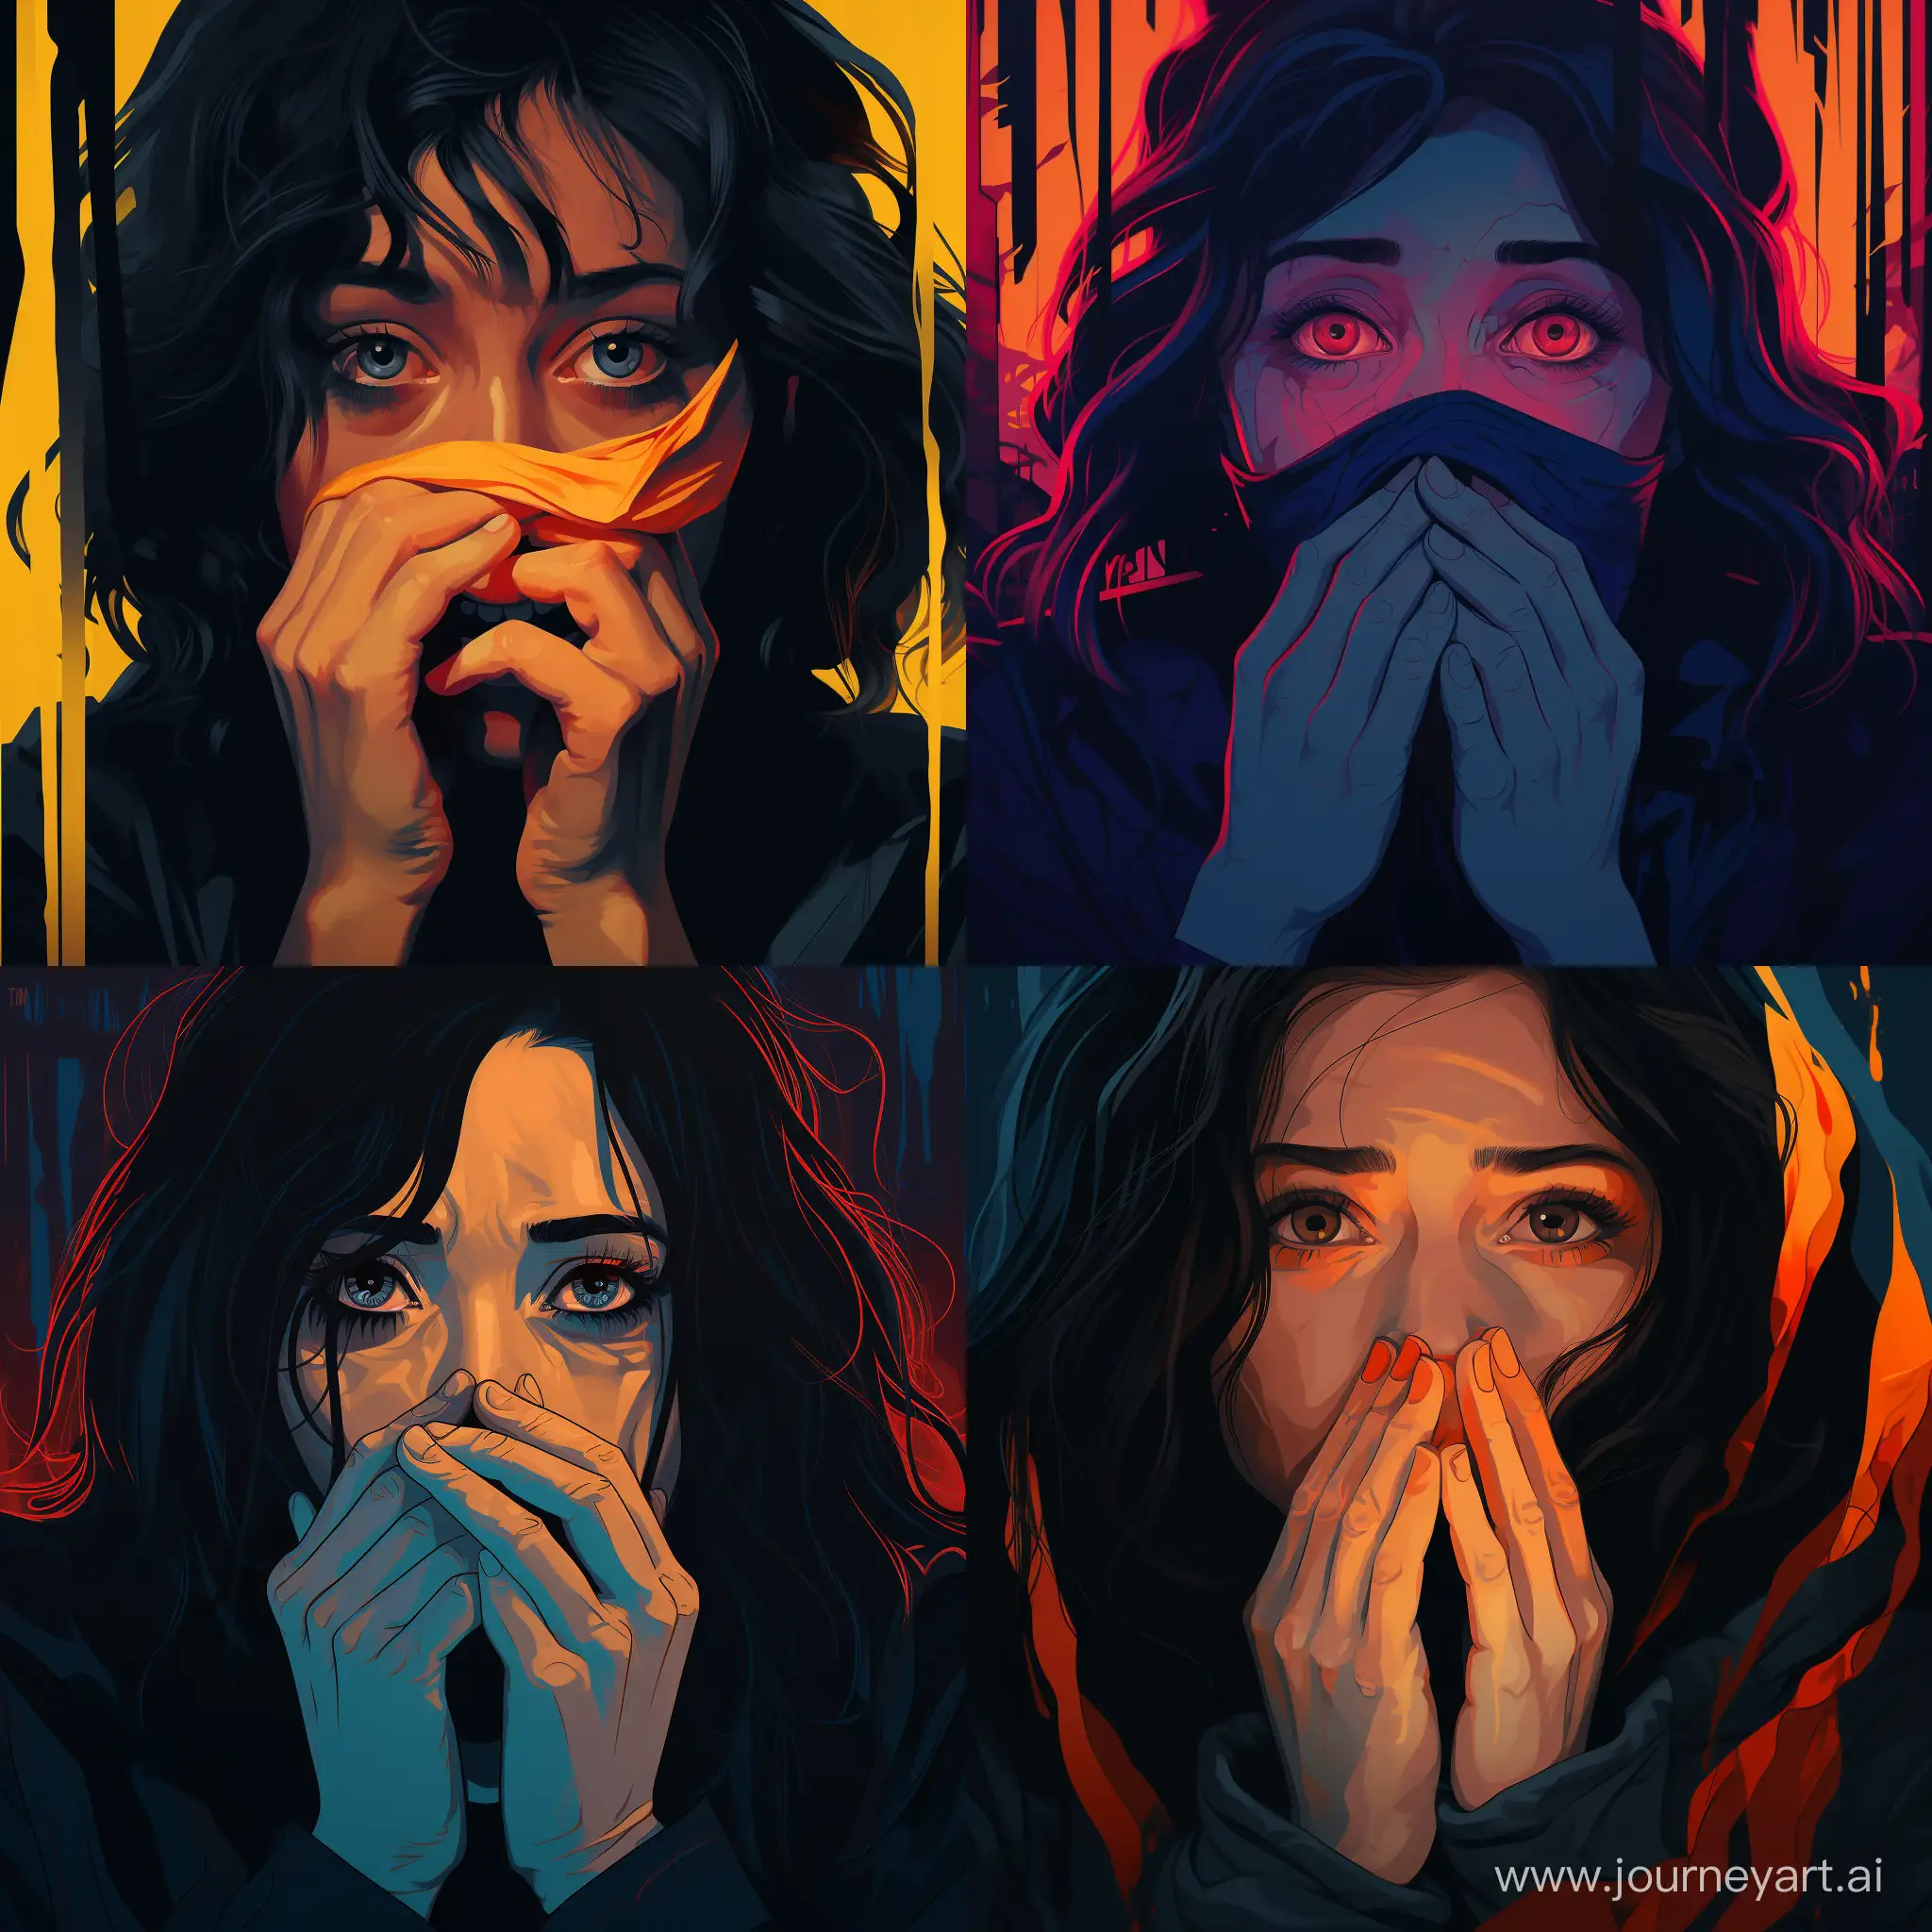 Fearful-Woman-Concealing-Emotions-in-Dark-AnimeStyle-Portrait